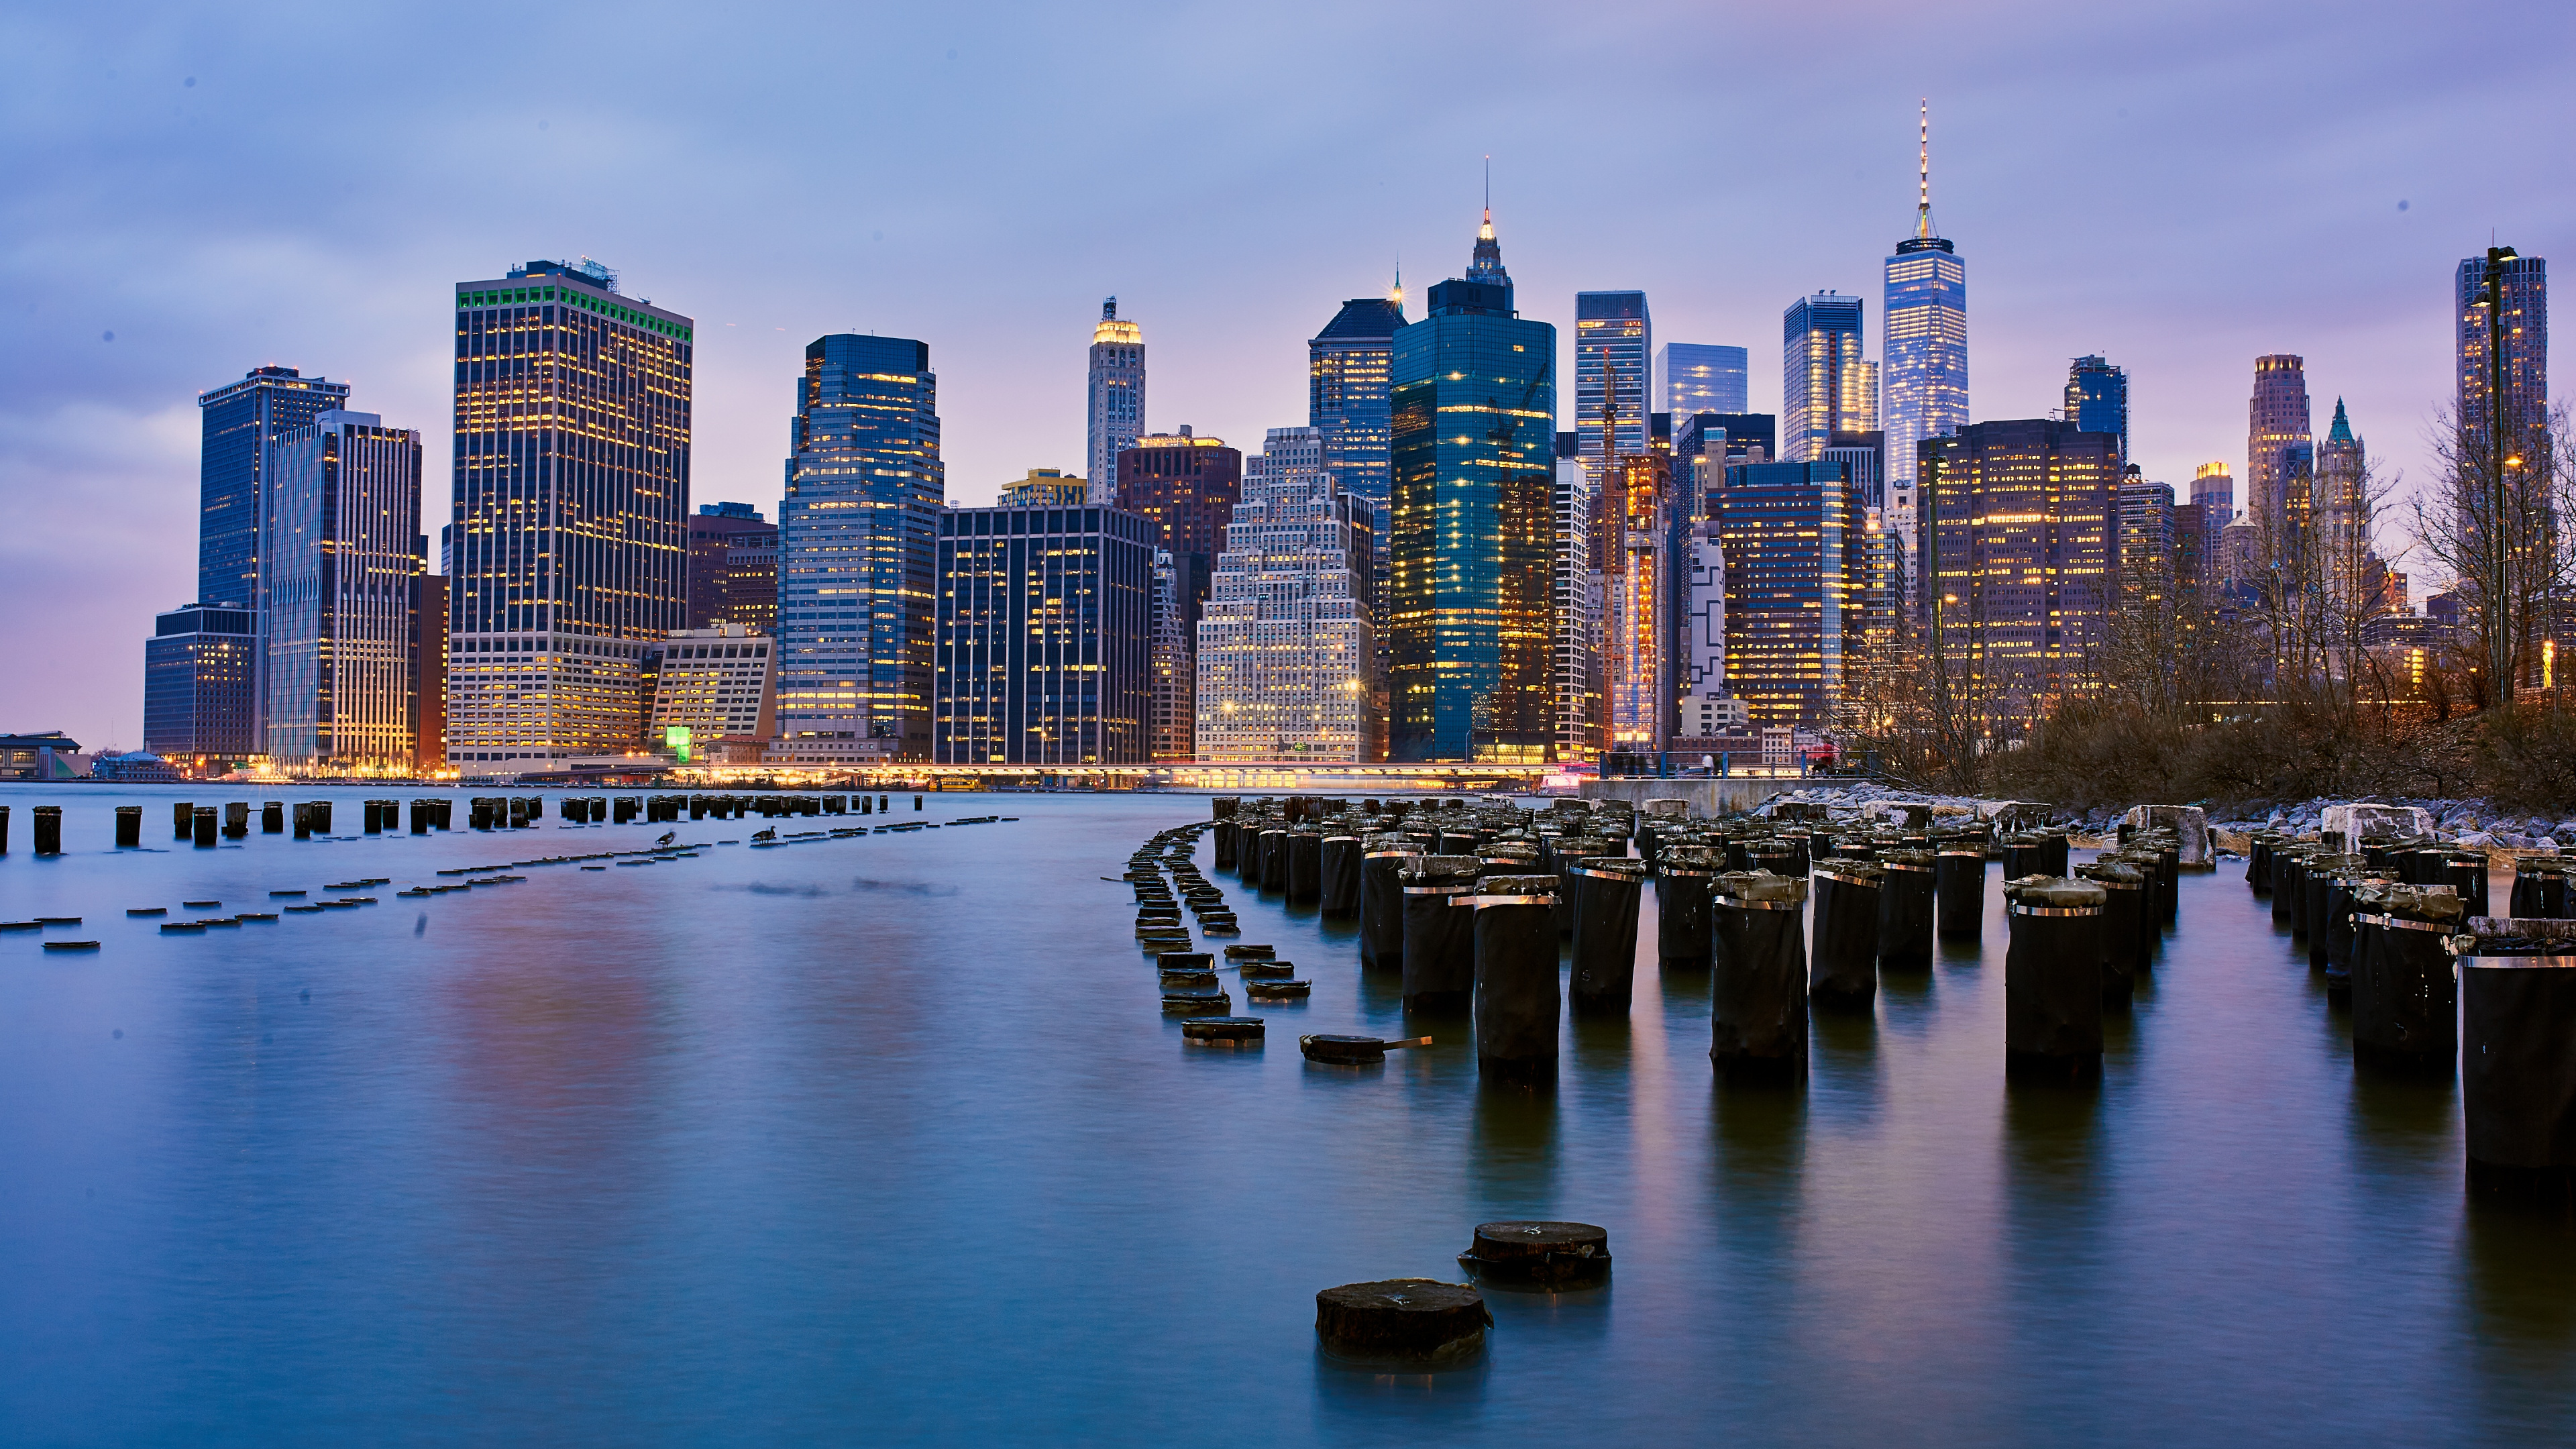 Download New York, buildings, cityscape wallpaper, 3840x 4K UHD 16: Widescreen